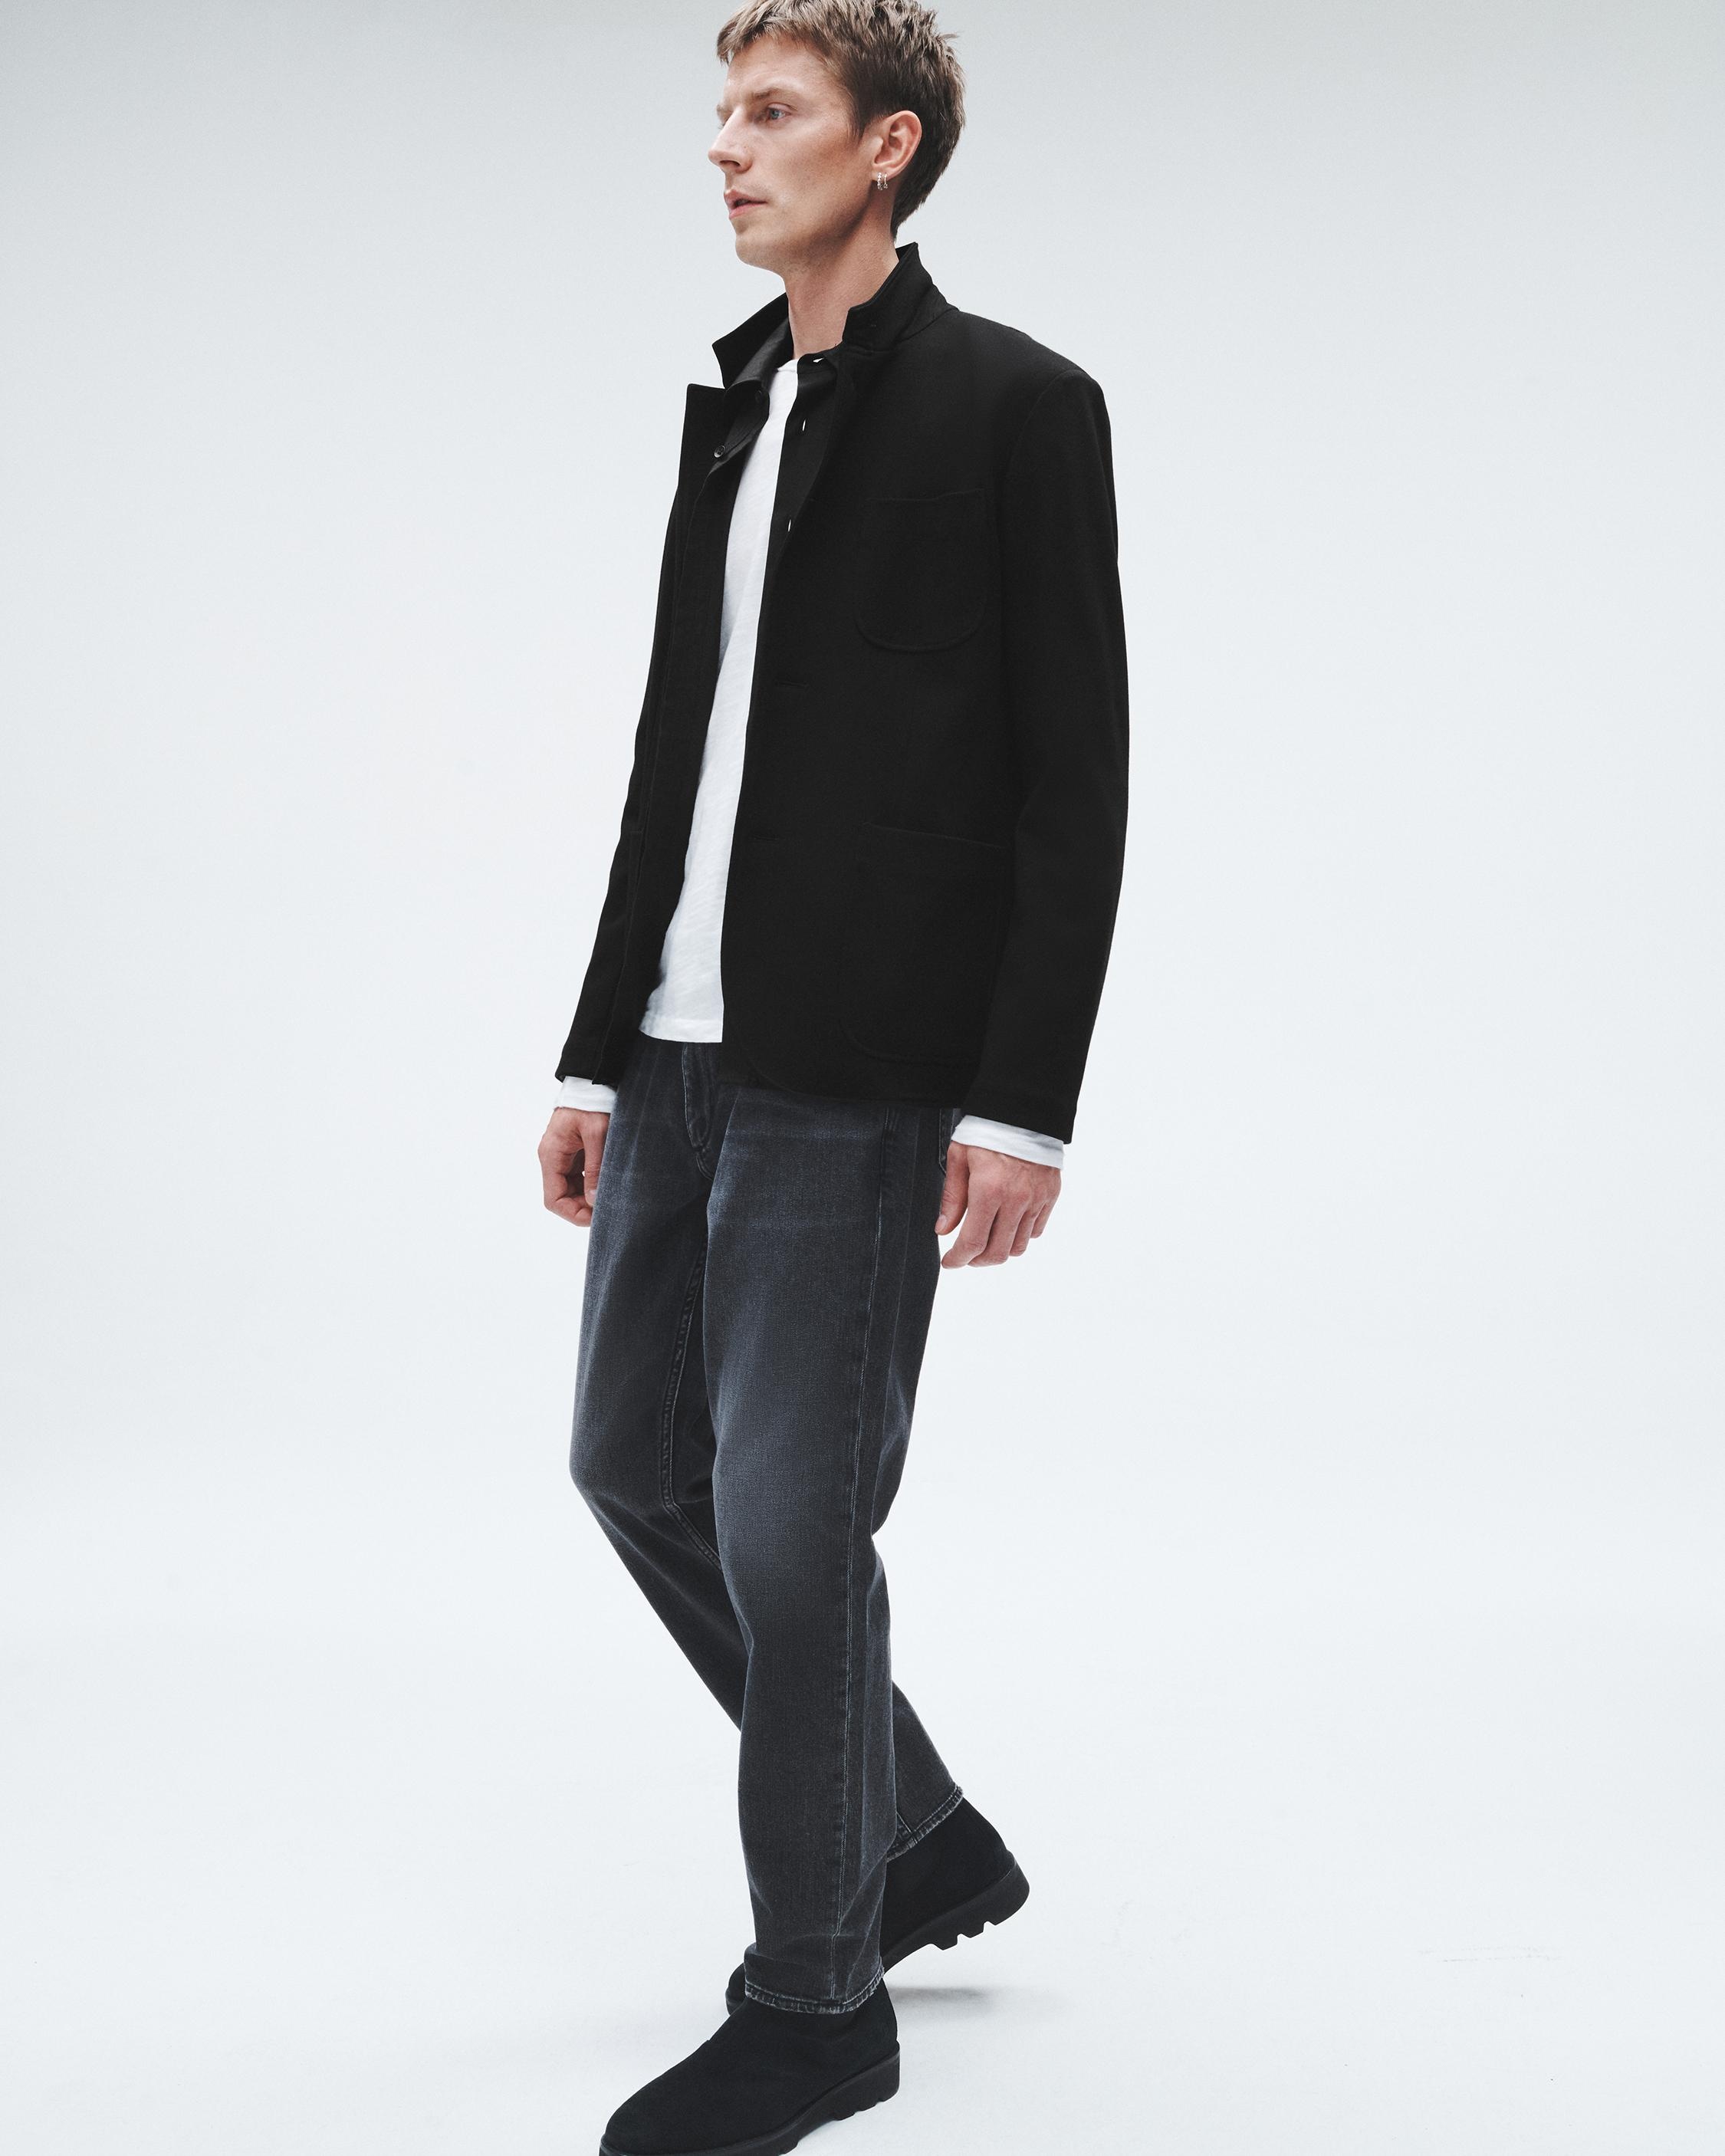 Prospect Japanese Wool Blazer
Tailored Fit - 3